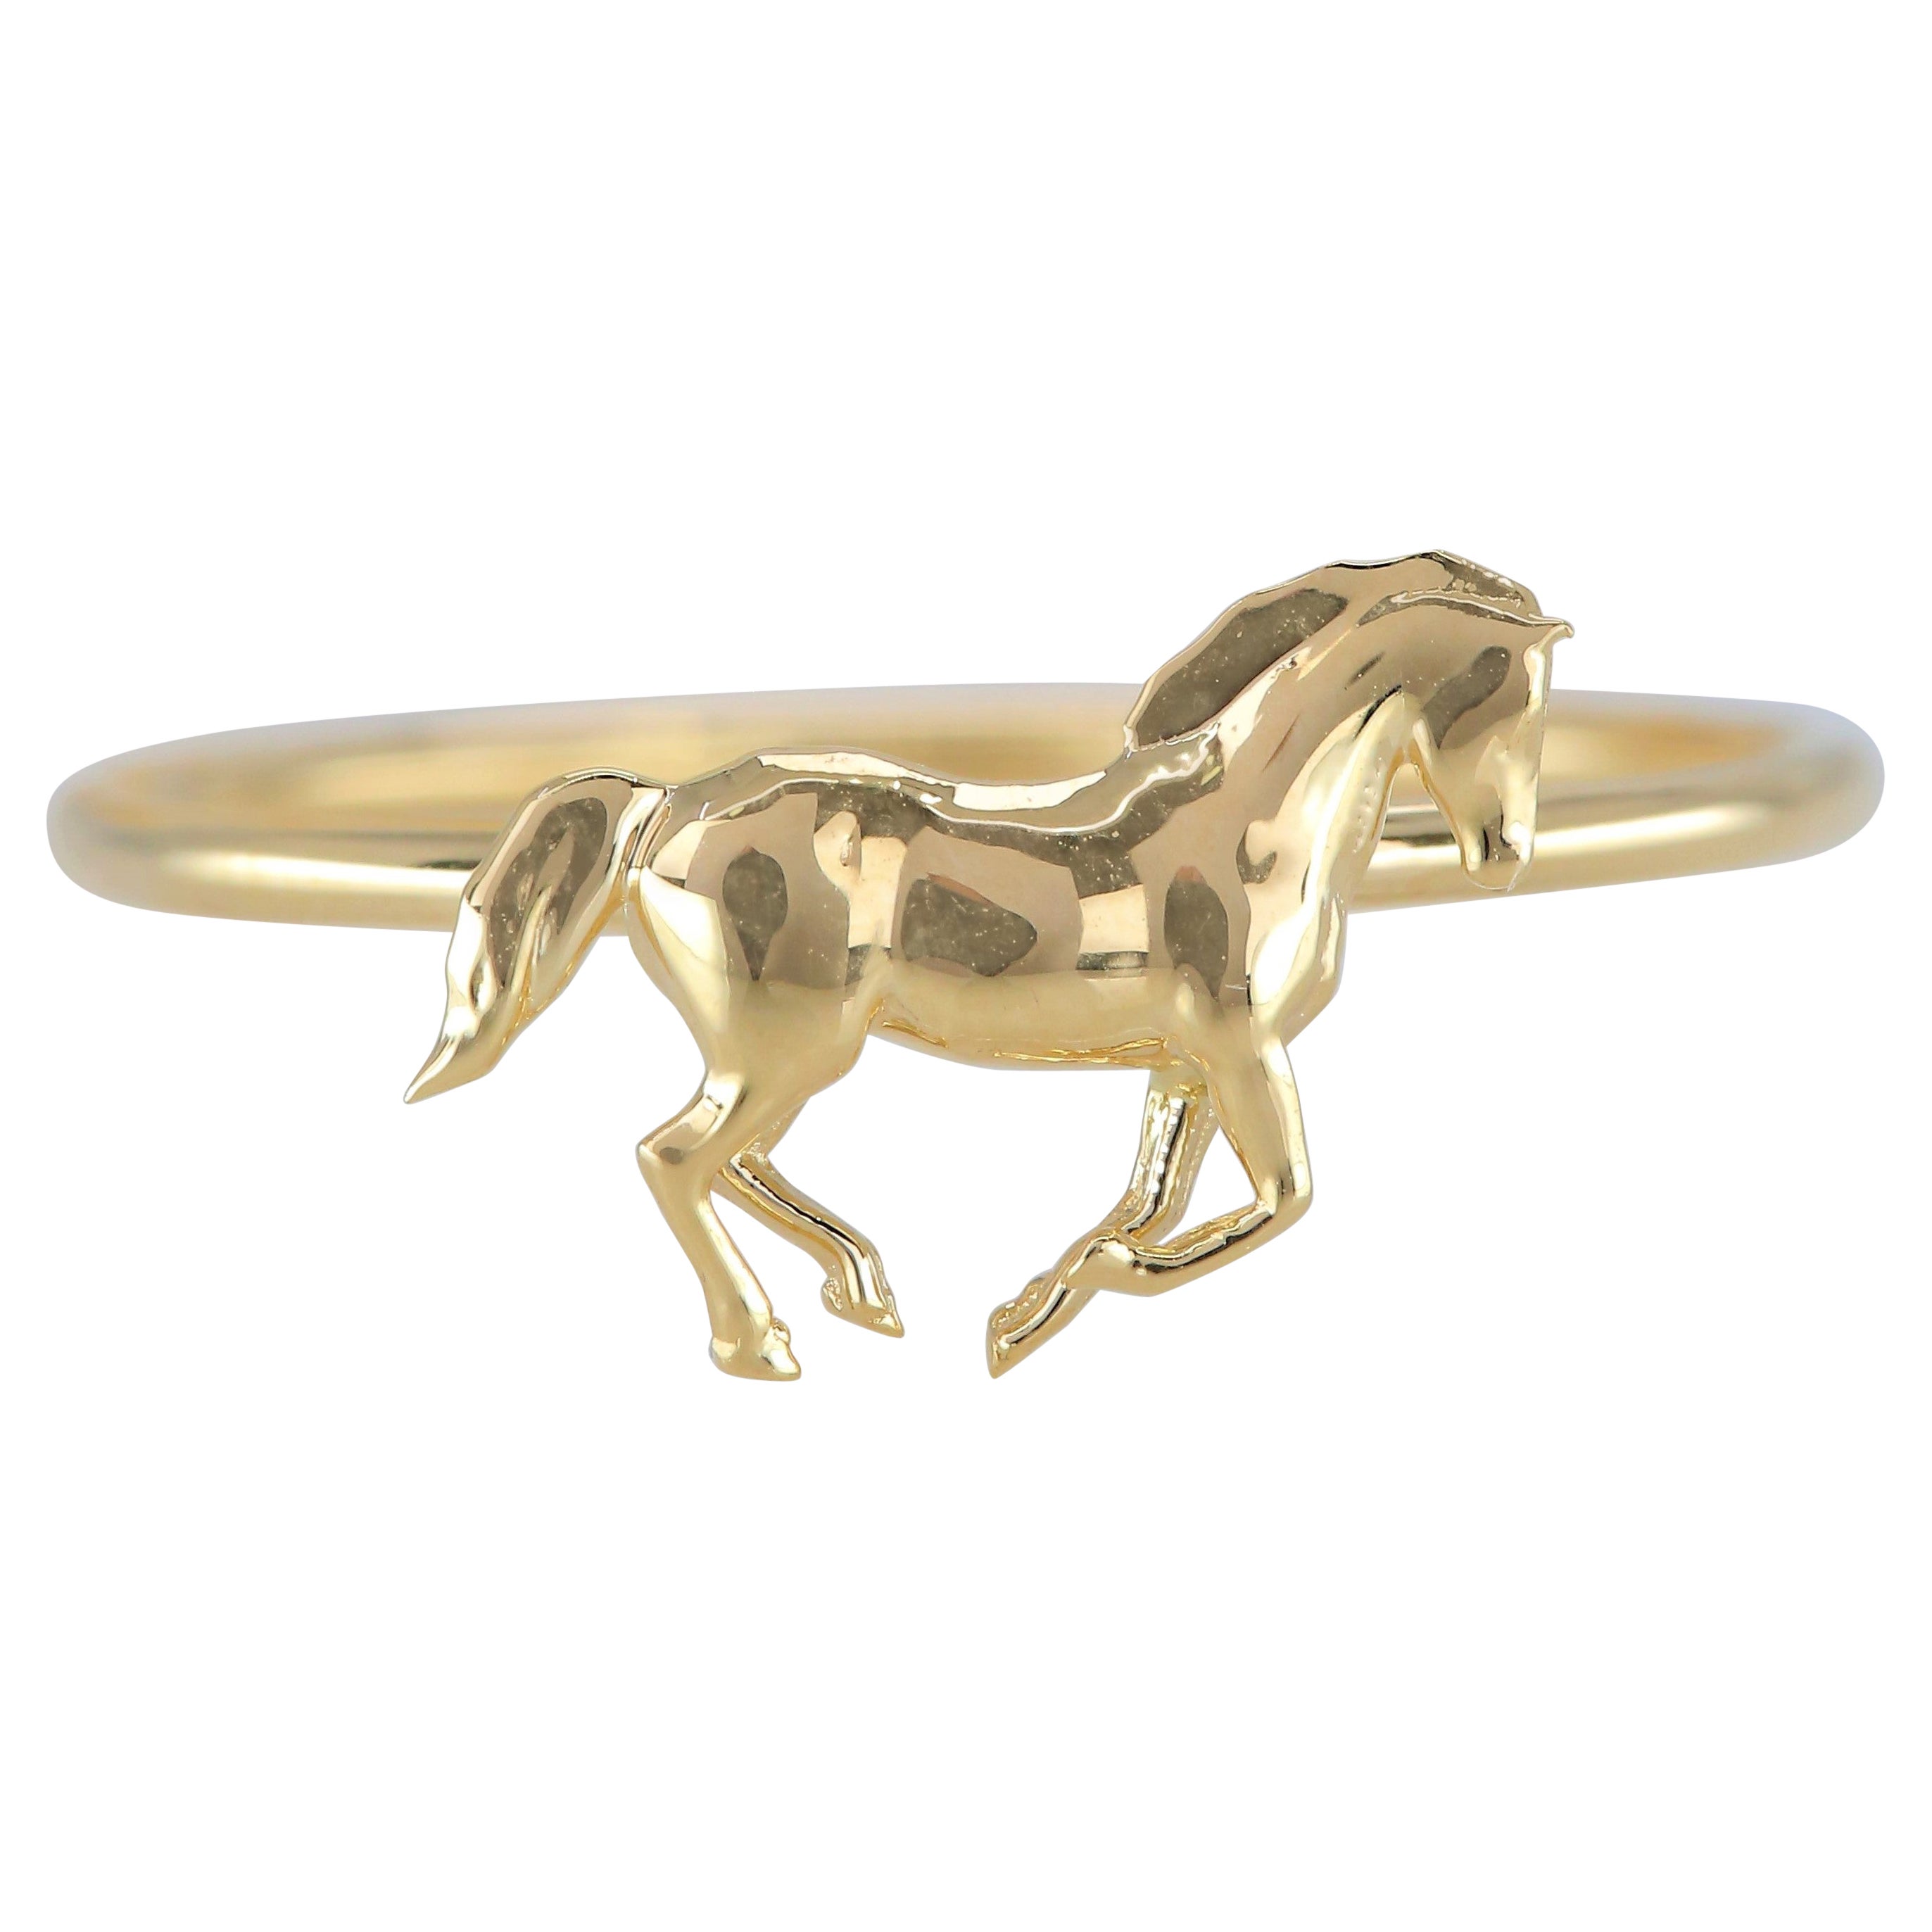 14K Gold Horse Ring, Pinky Horse Ring, 14K Gold Horse Animal Ring